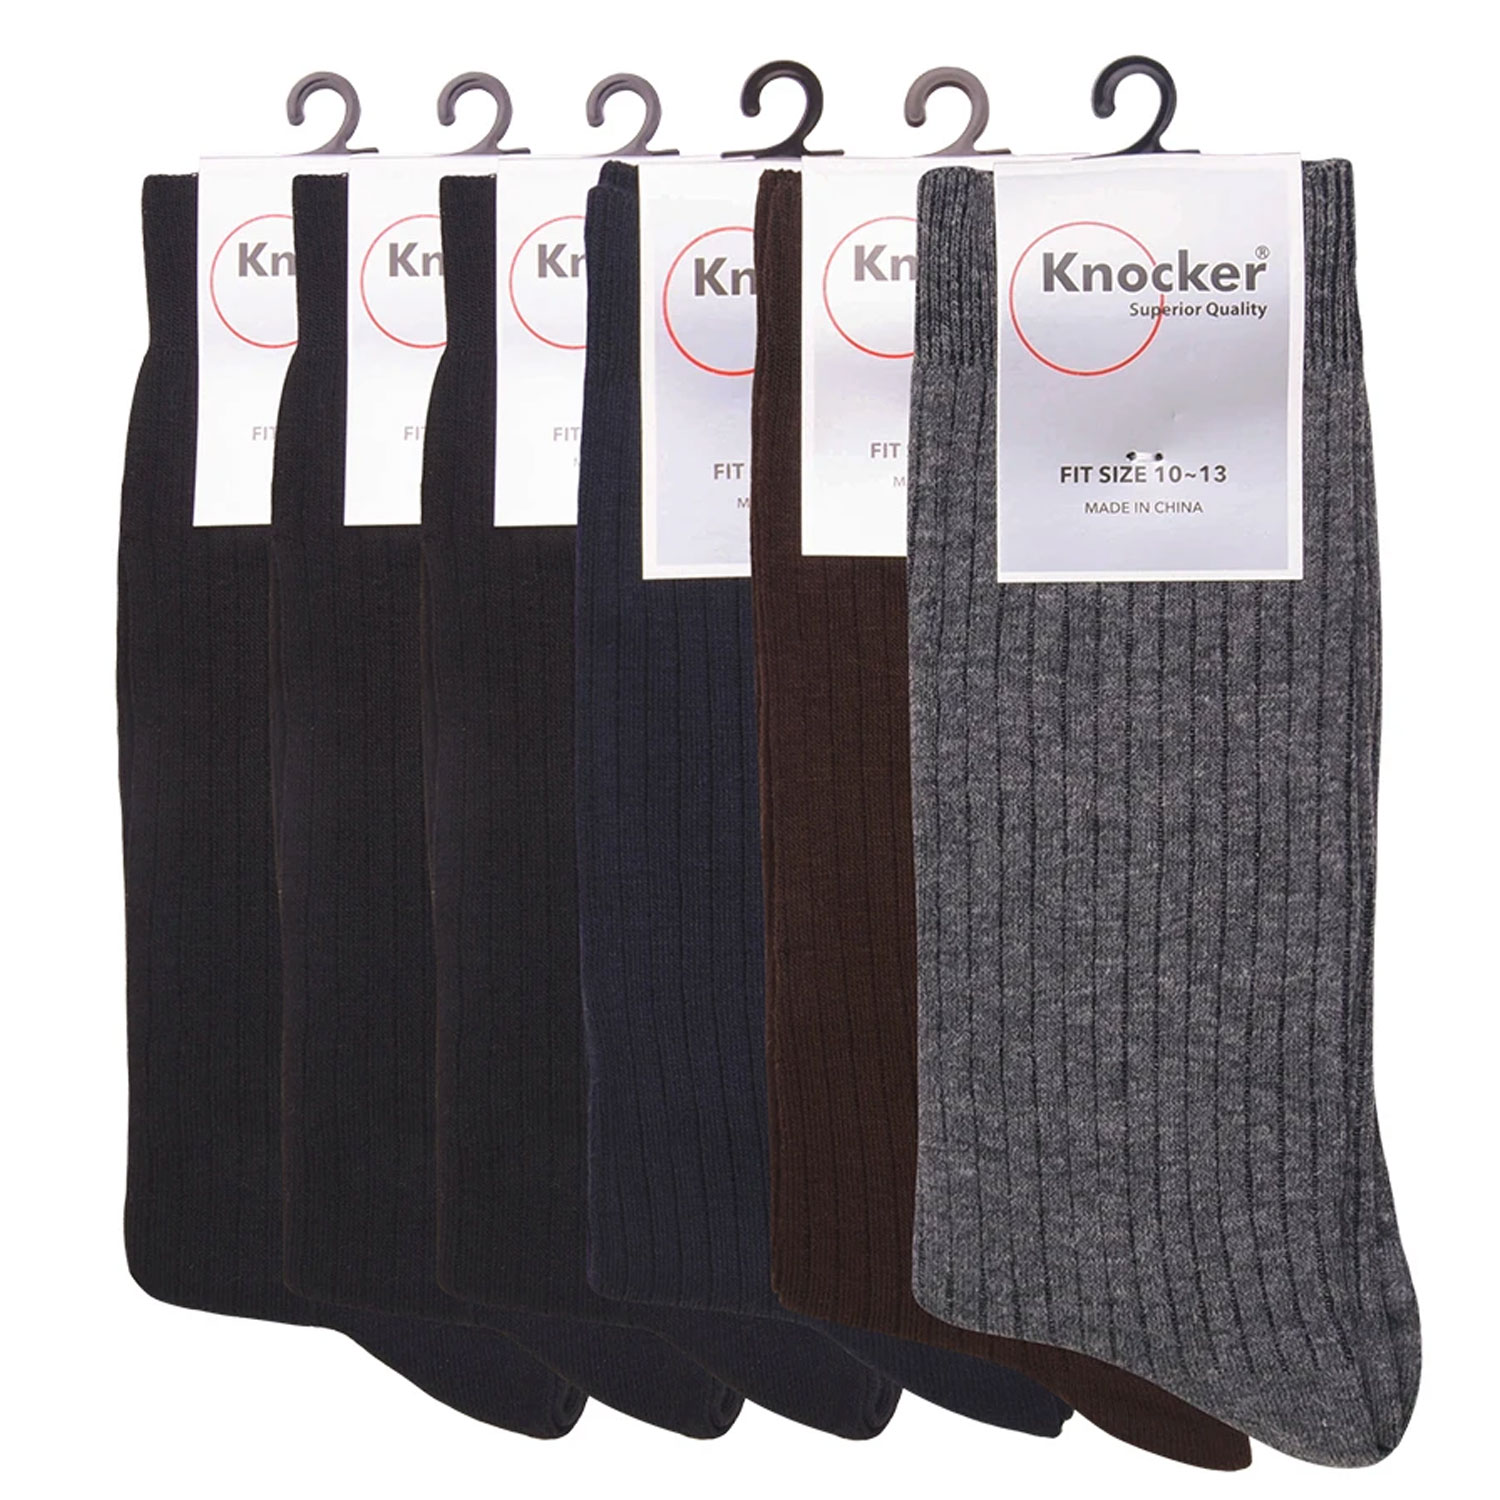 Men's Dress Socks - 6 Pair